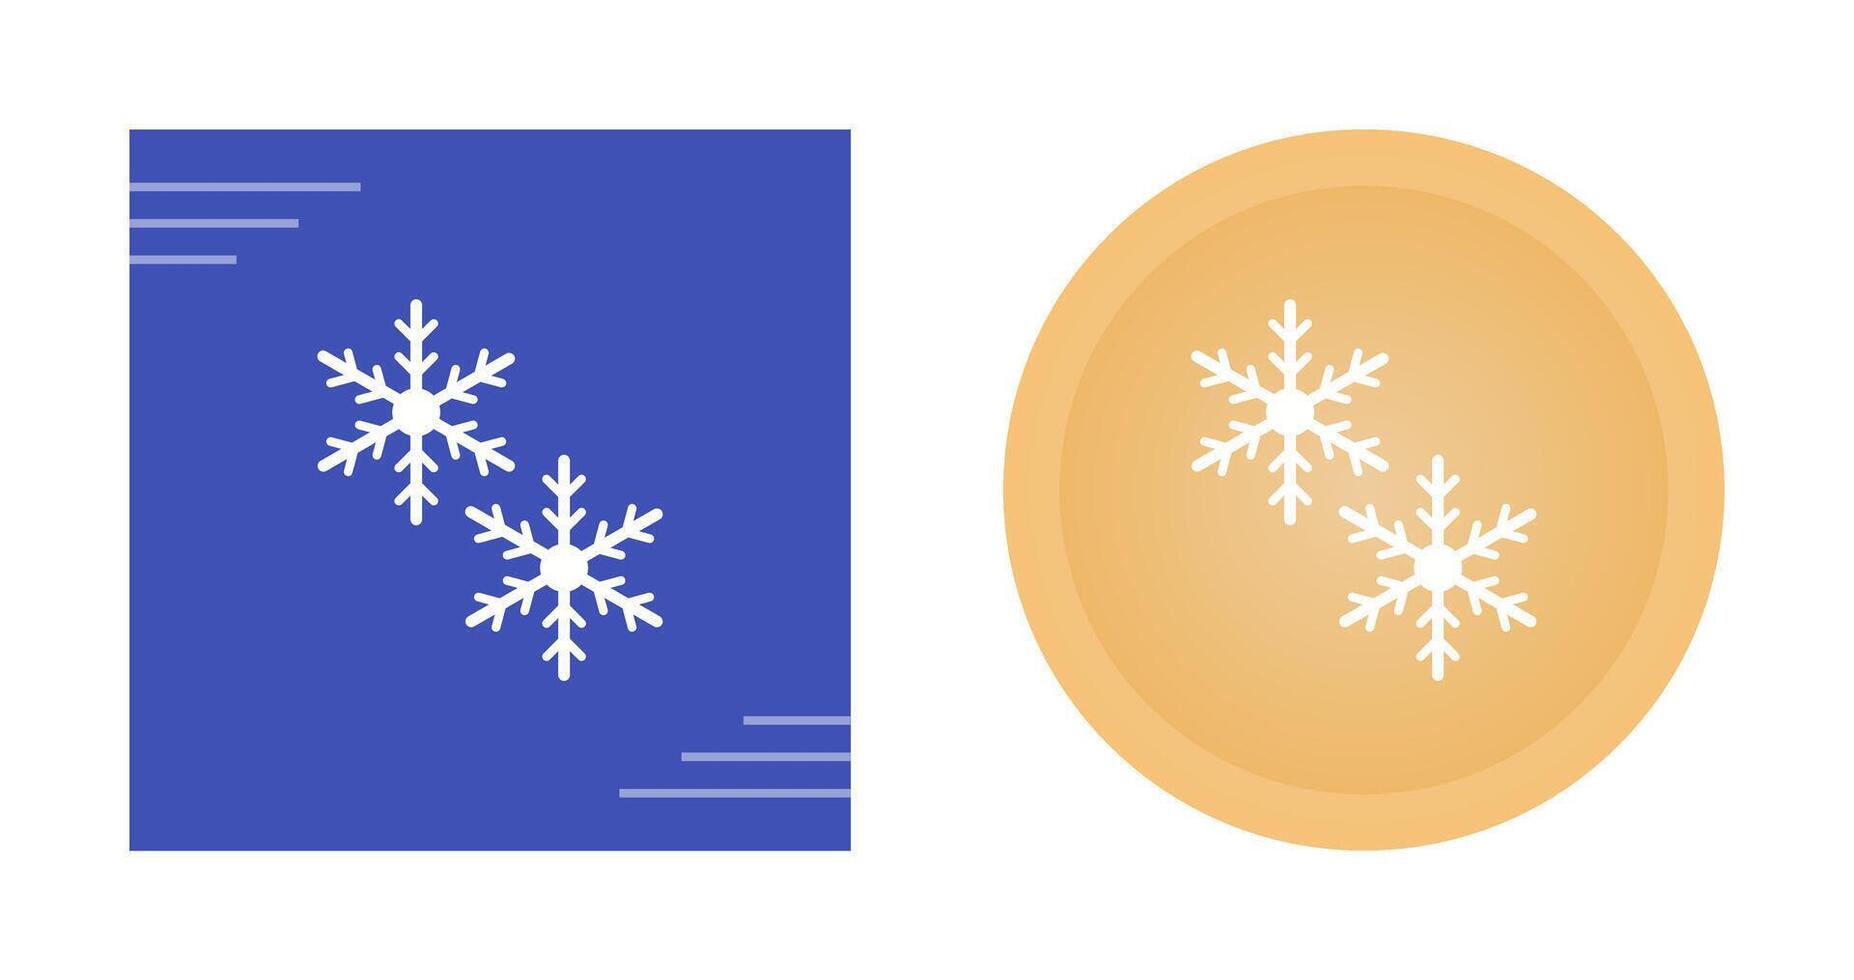 snöflingor vektor ikon